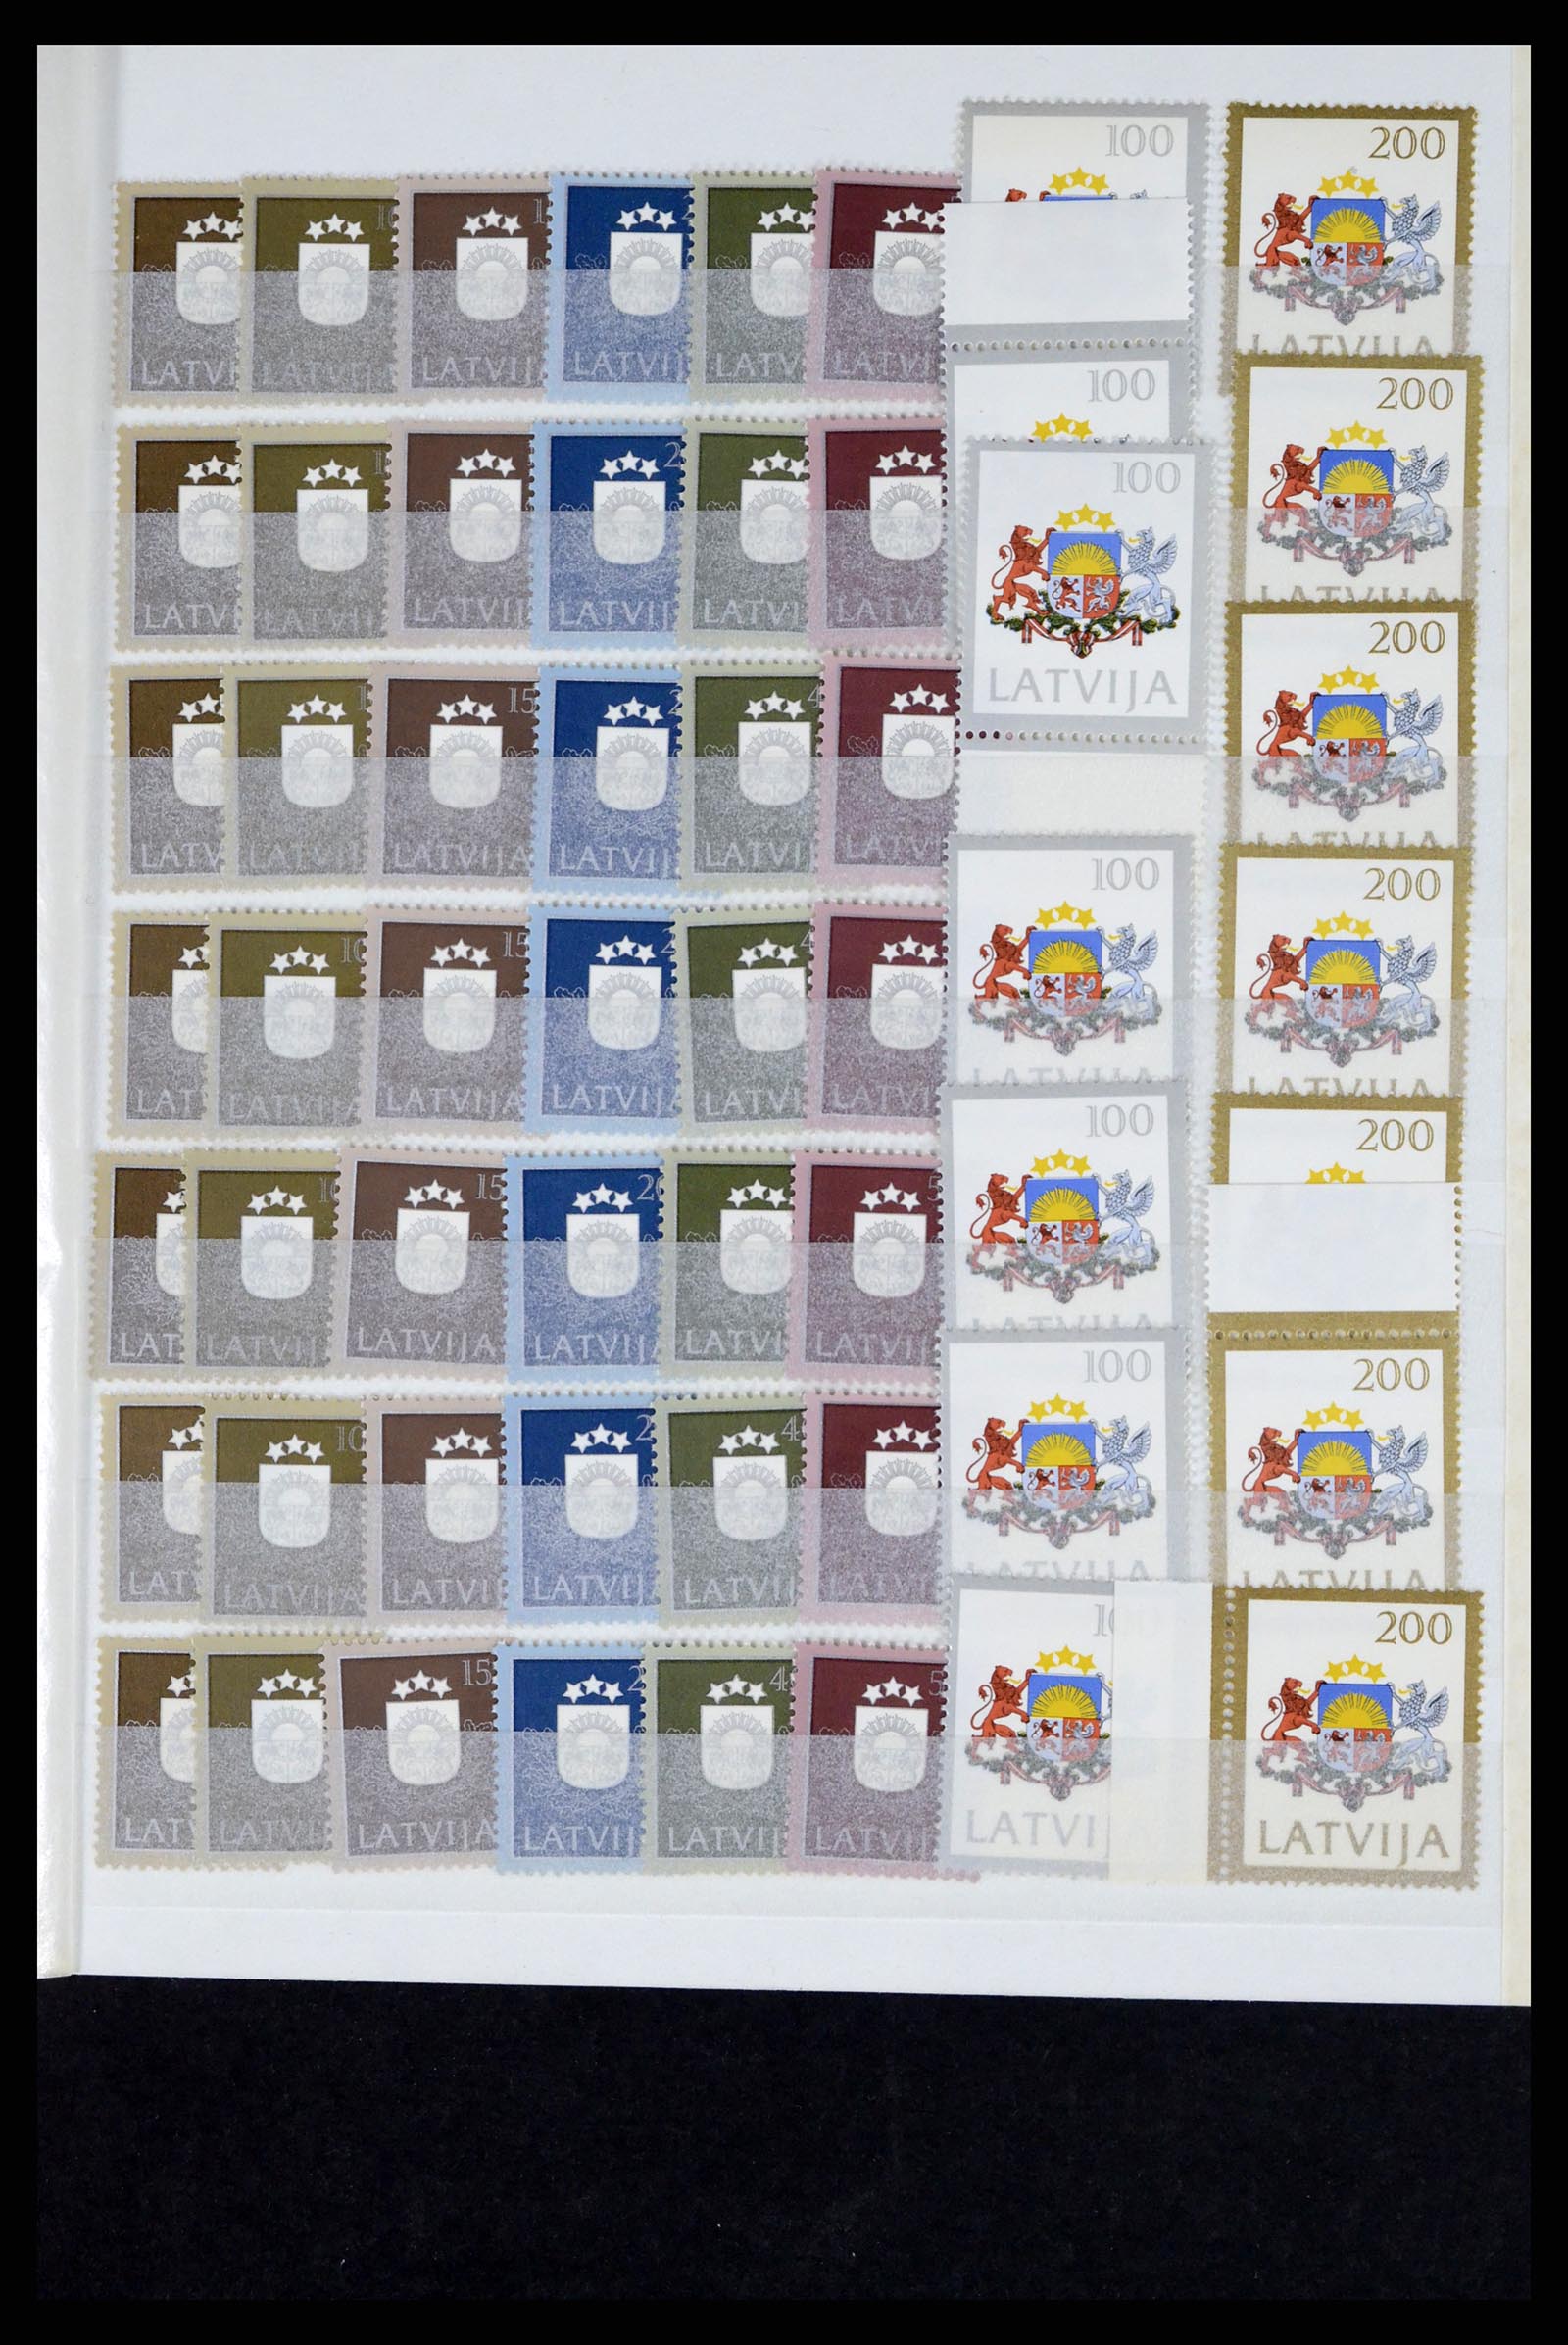 37351 296 - Postzegelverzameling 37351 Europese landen postfris 1990-2000.